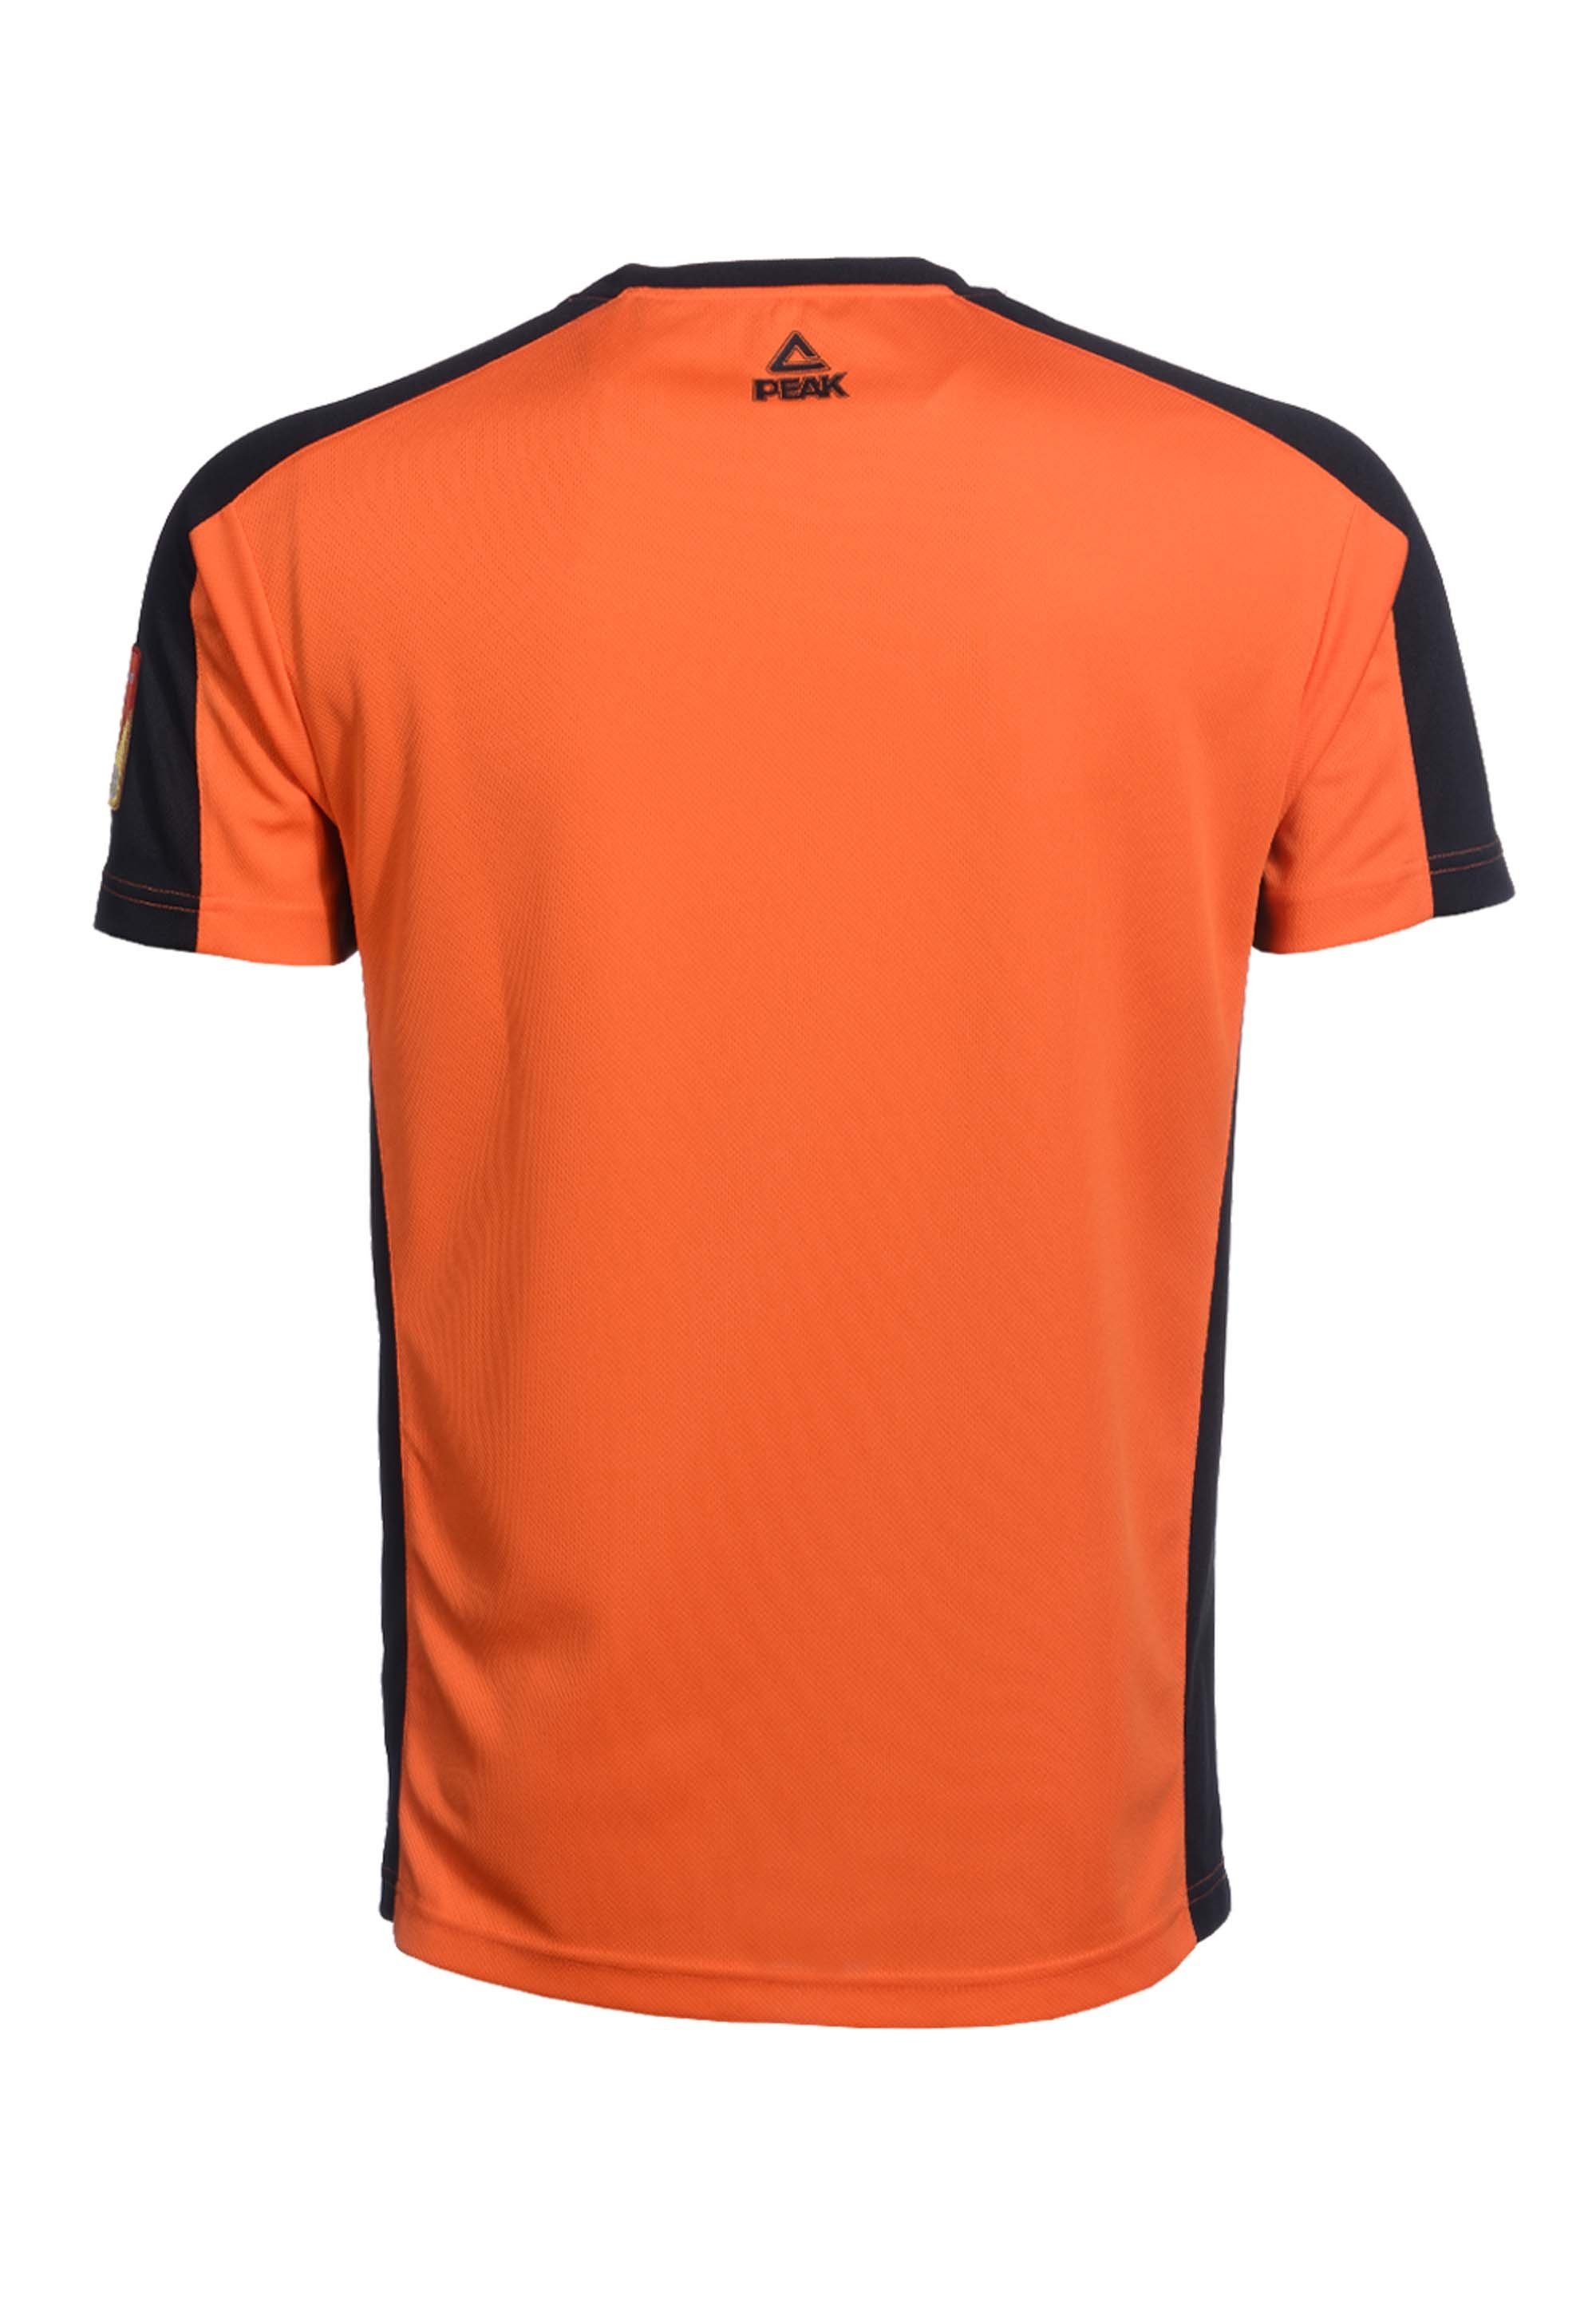 Logo Tragekomfort PEAK orange-schwarz mit DBB hohem Basketballtrikot 2.0